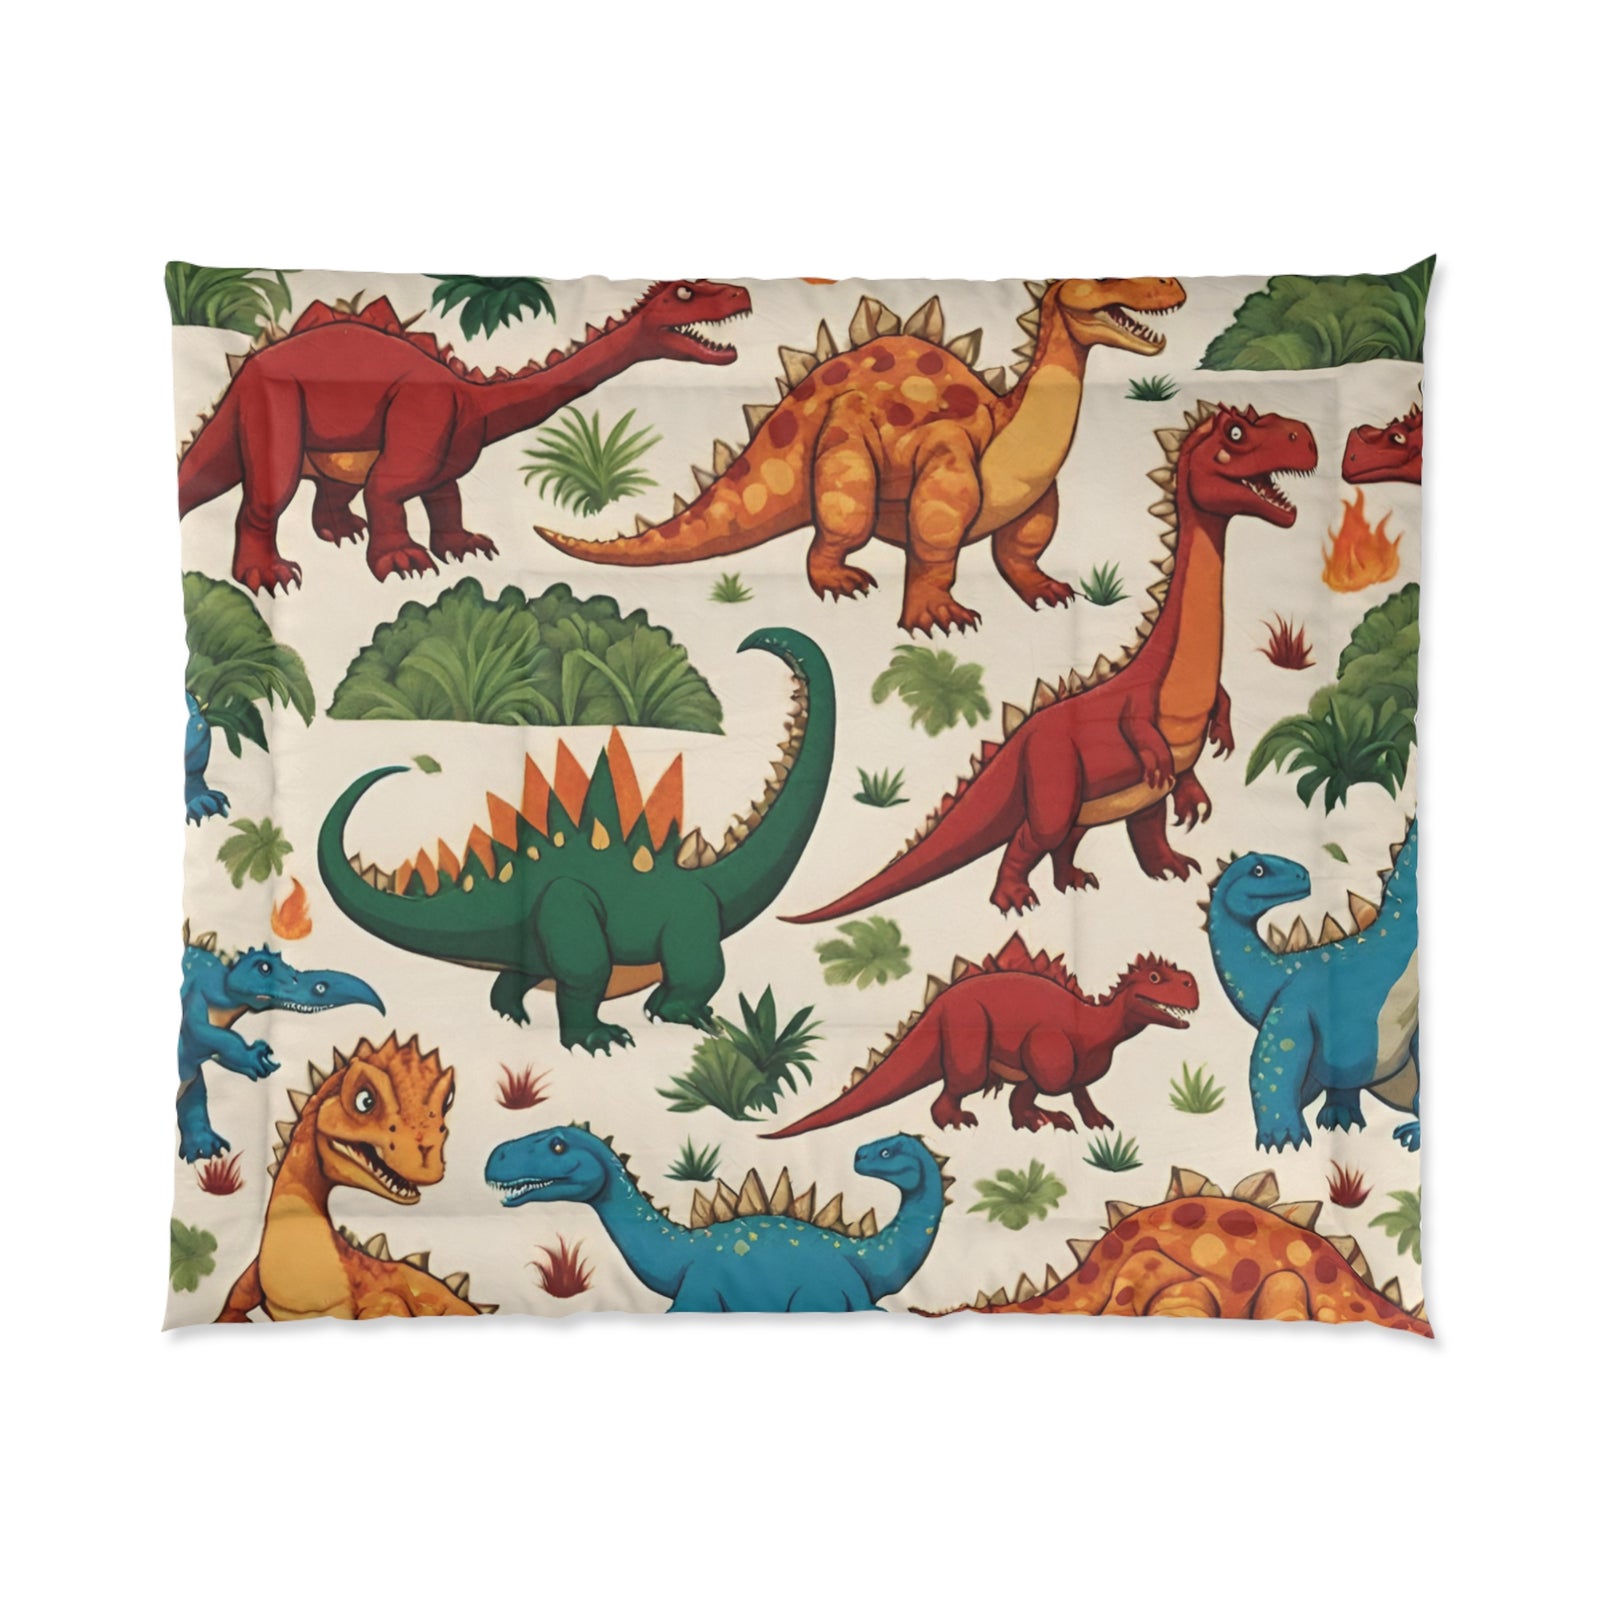 Dino-Delight: Roaringly Fun Dinosaur-Themed Kids' Comforter – Cozy and Vibrant Bedding for Little Explorers!